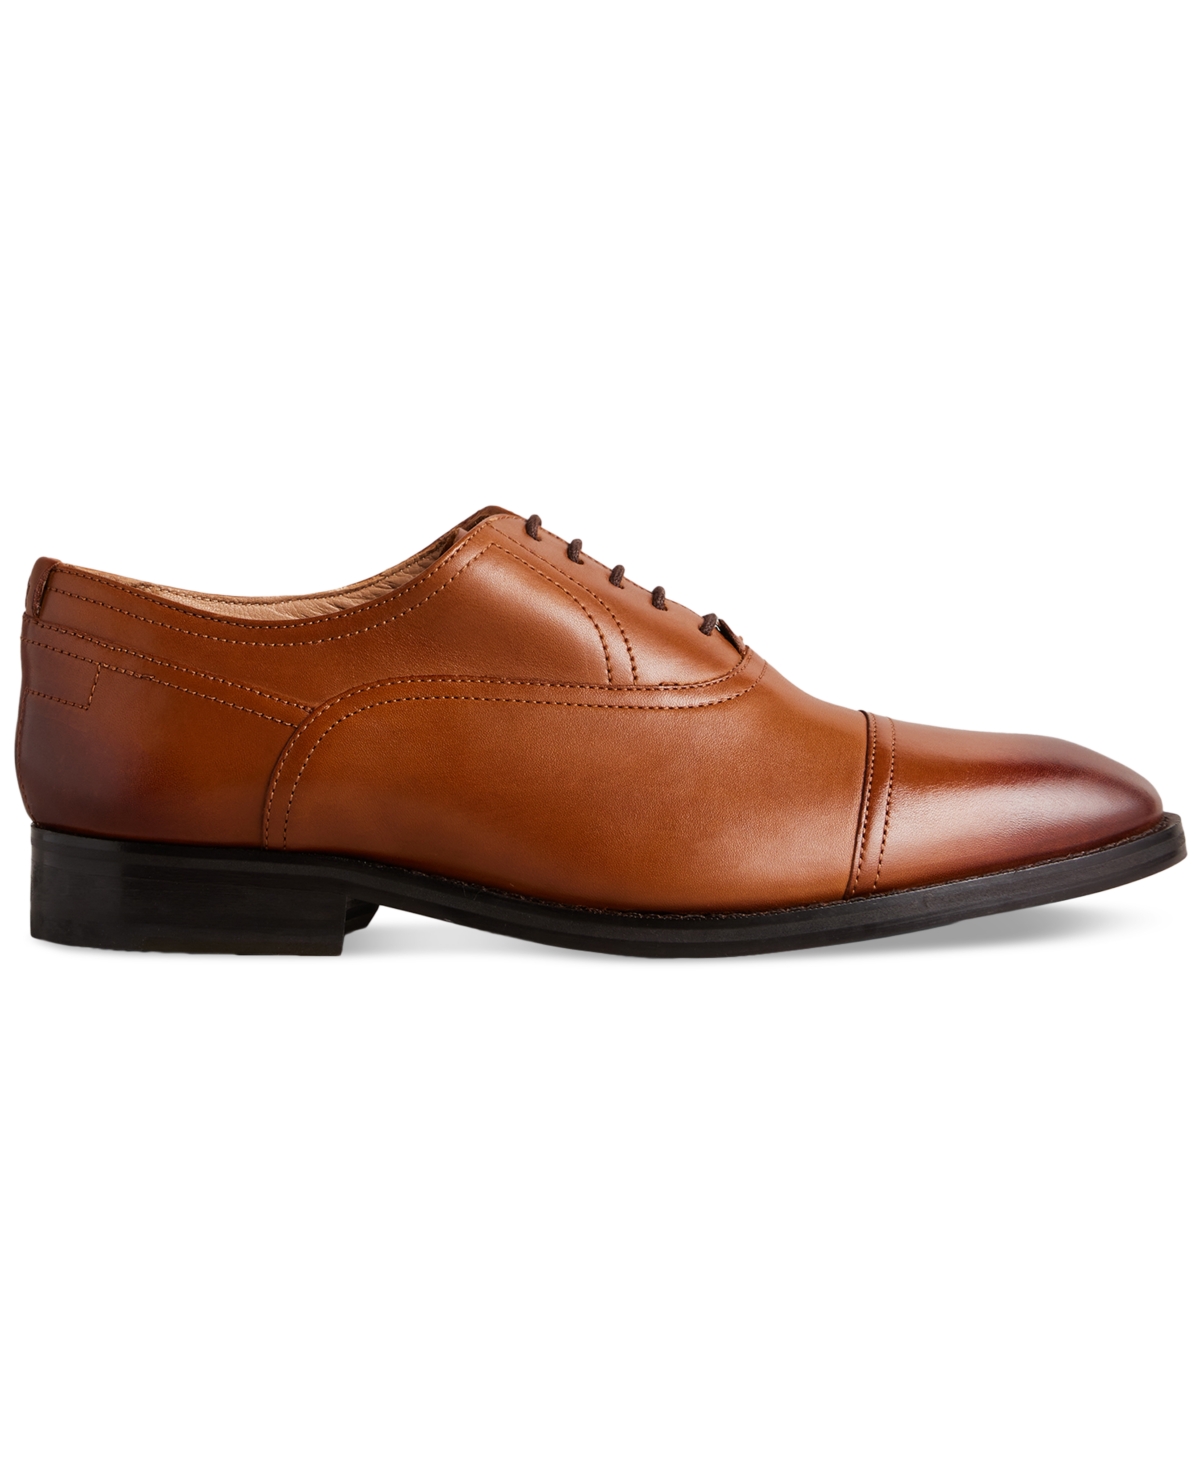 Men's Carlen Formal Leather Oxford Dress Shoe - Tan